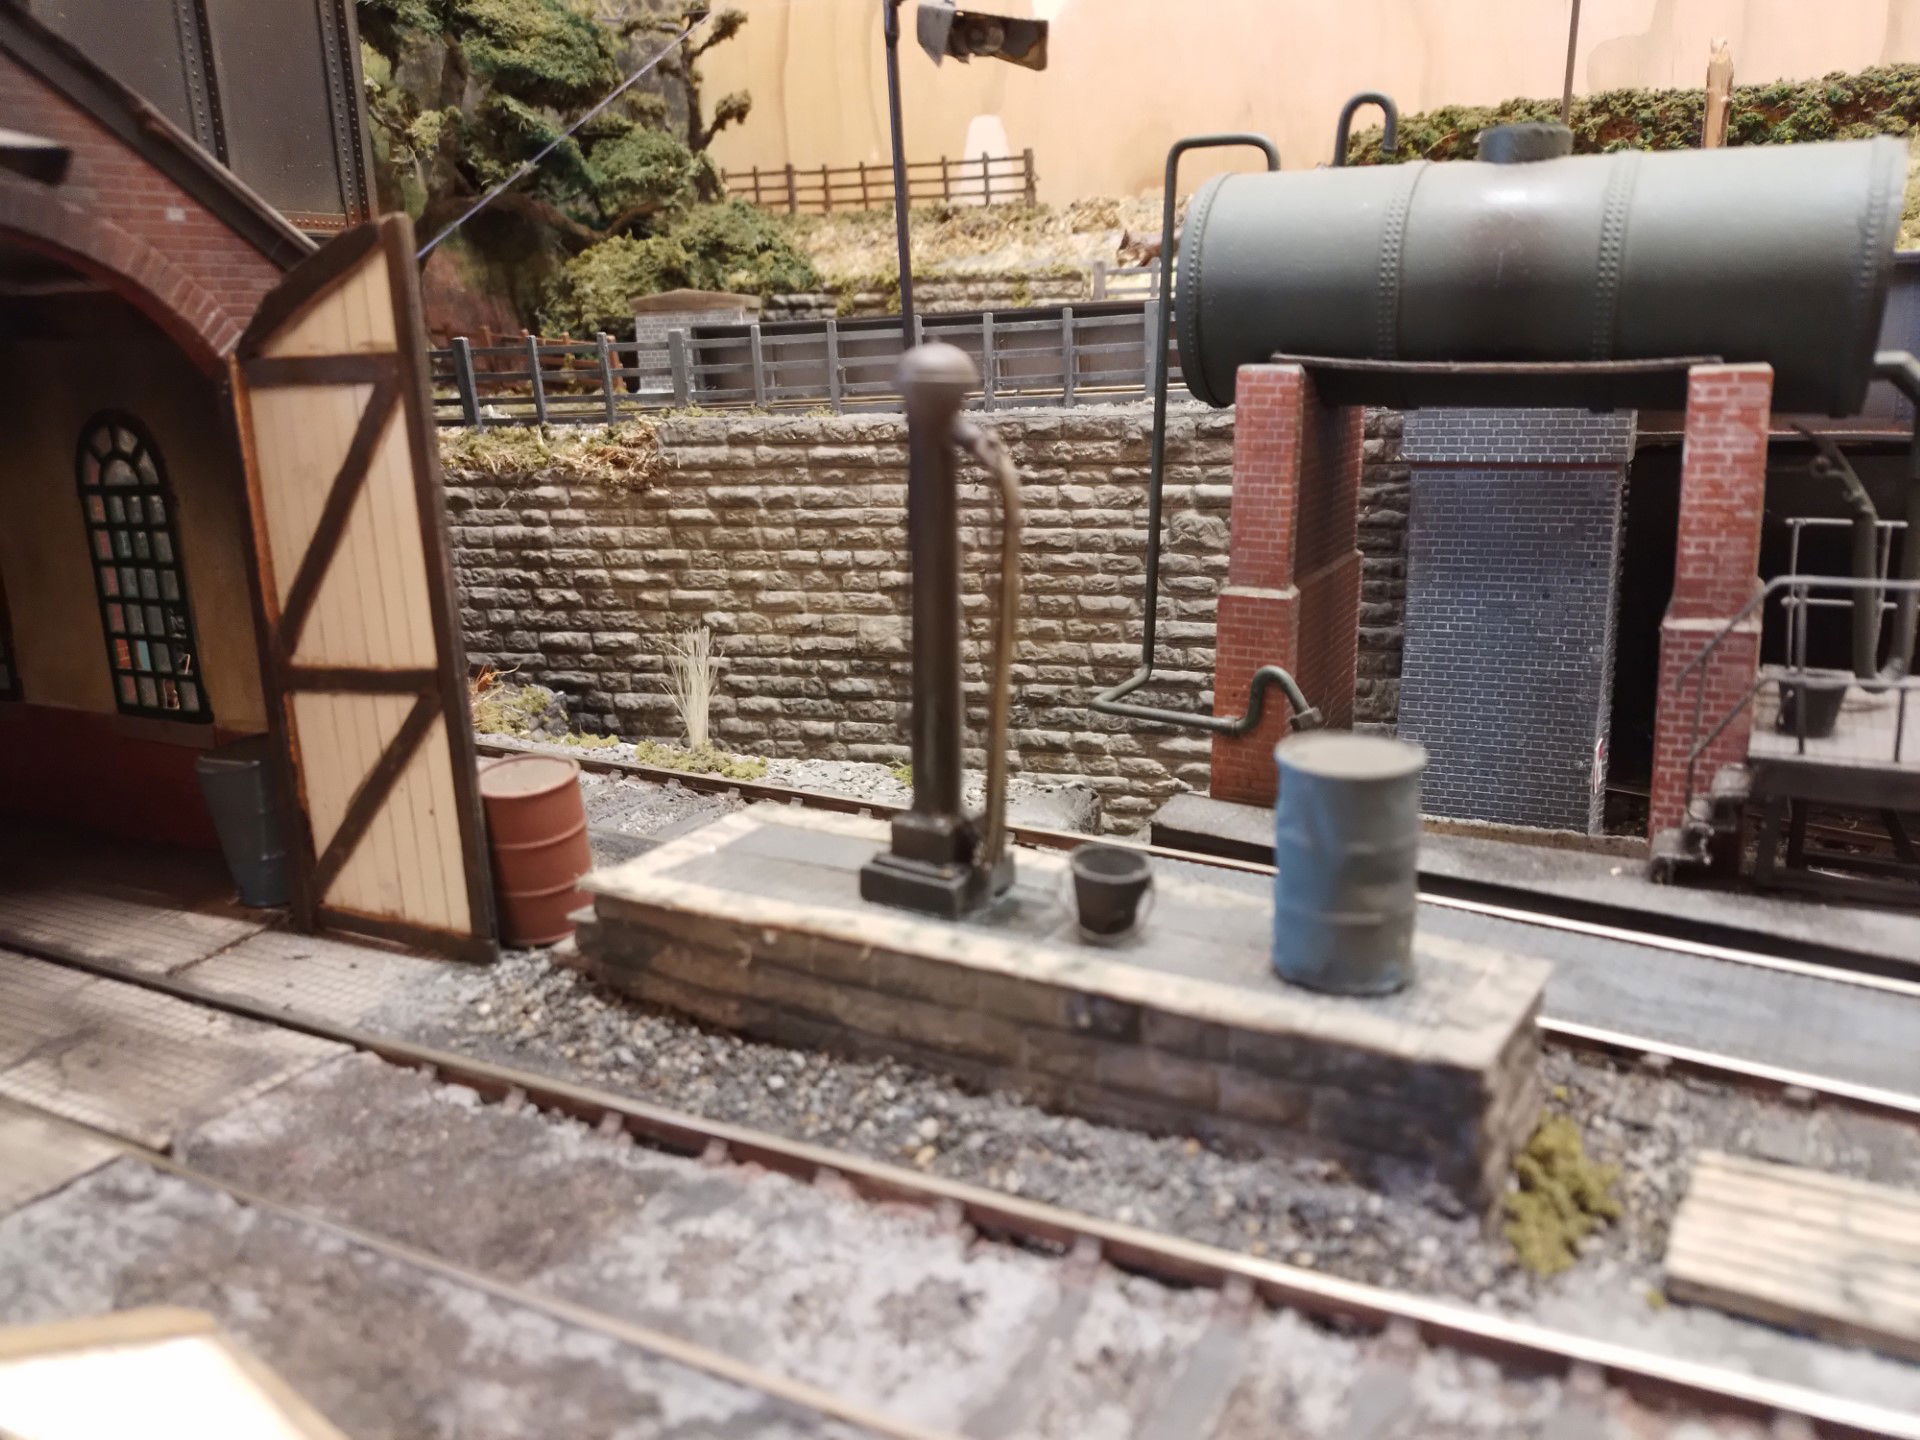 Norman Colliery O gauge model railway layout.